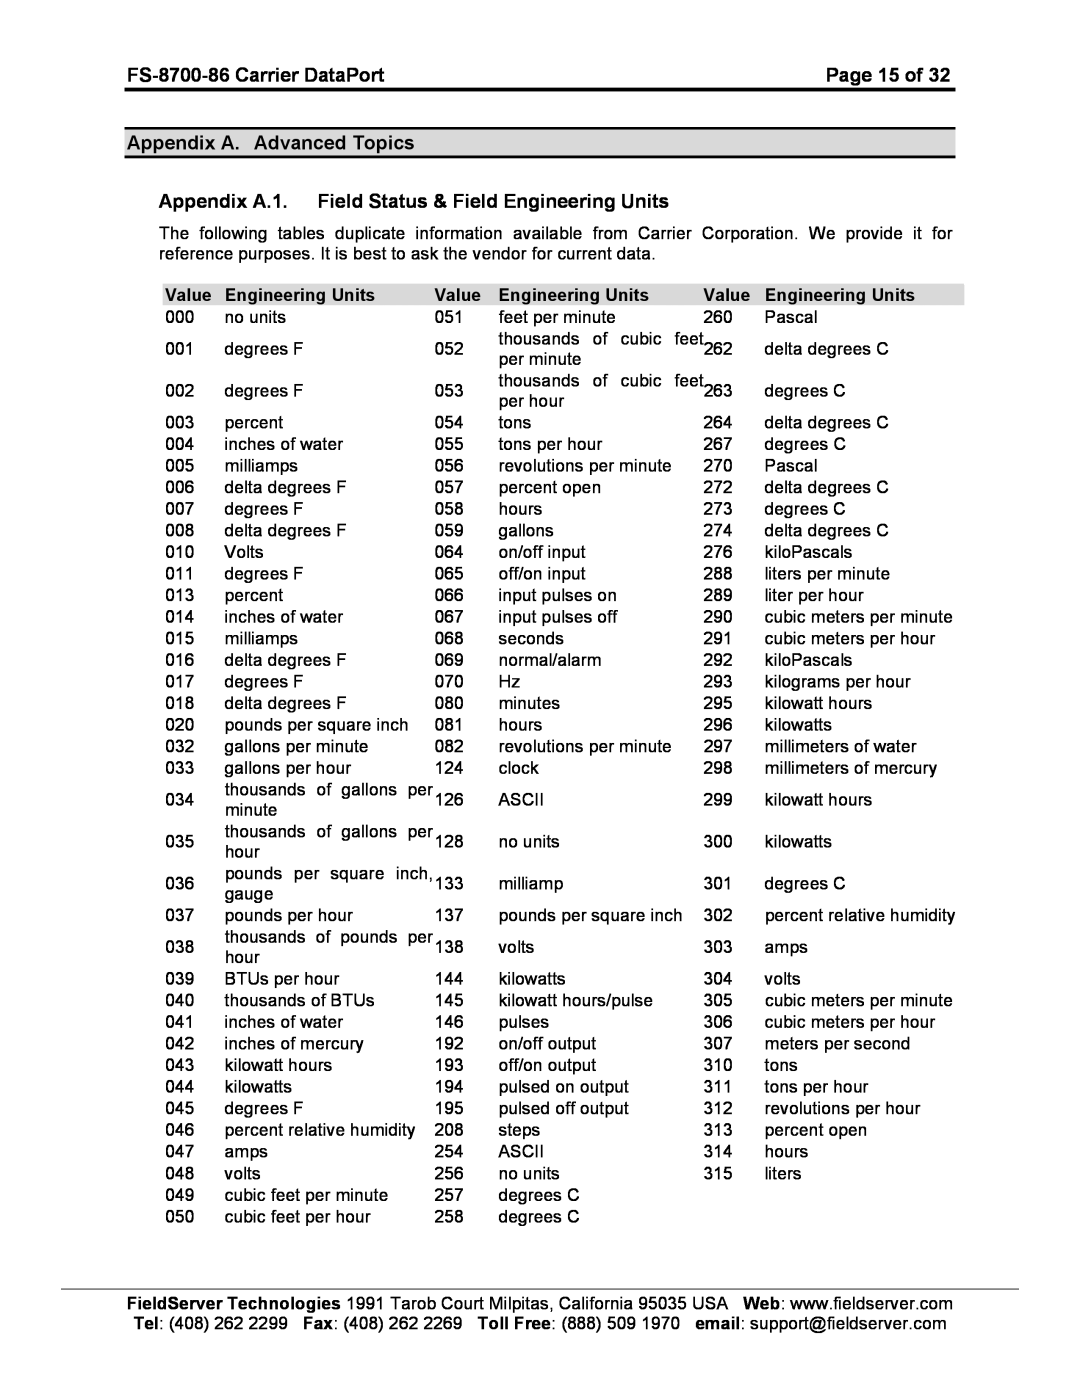 FieldServer FS-8700-86 Page 15 of, Appendix A. Advanced Topics, Appendix A.1. Field Status & Field Engineering Units 